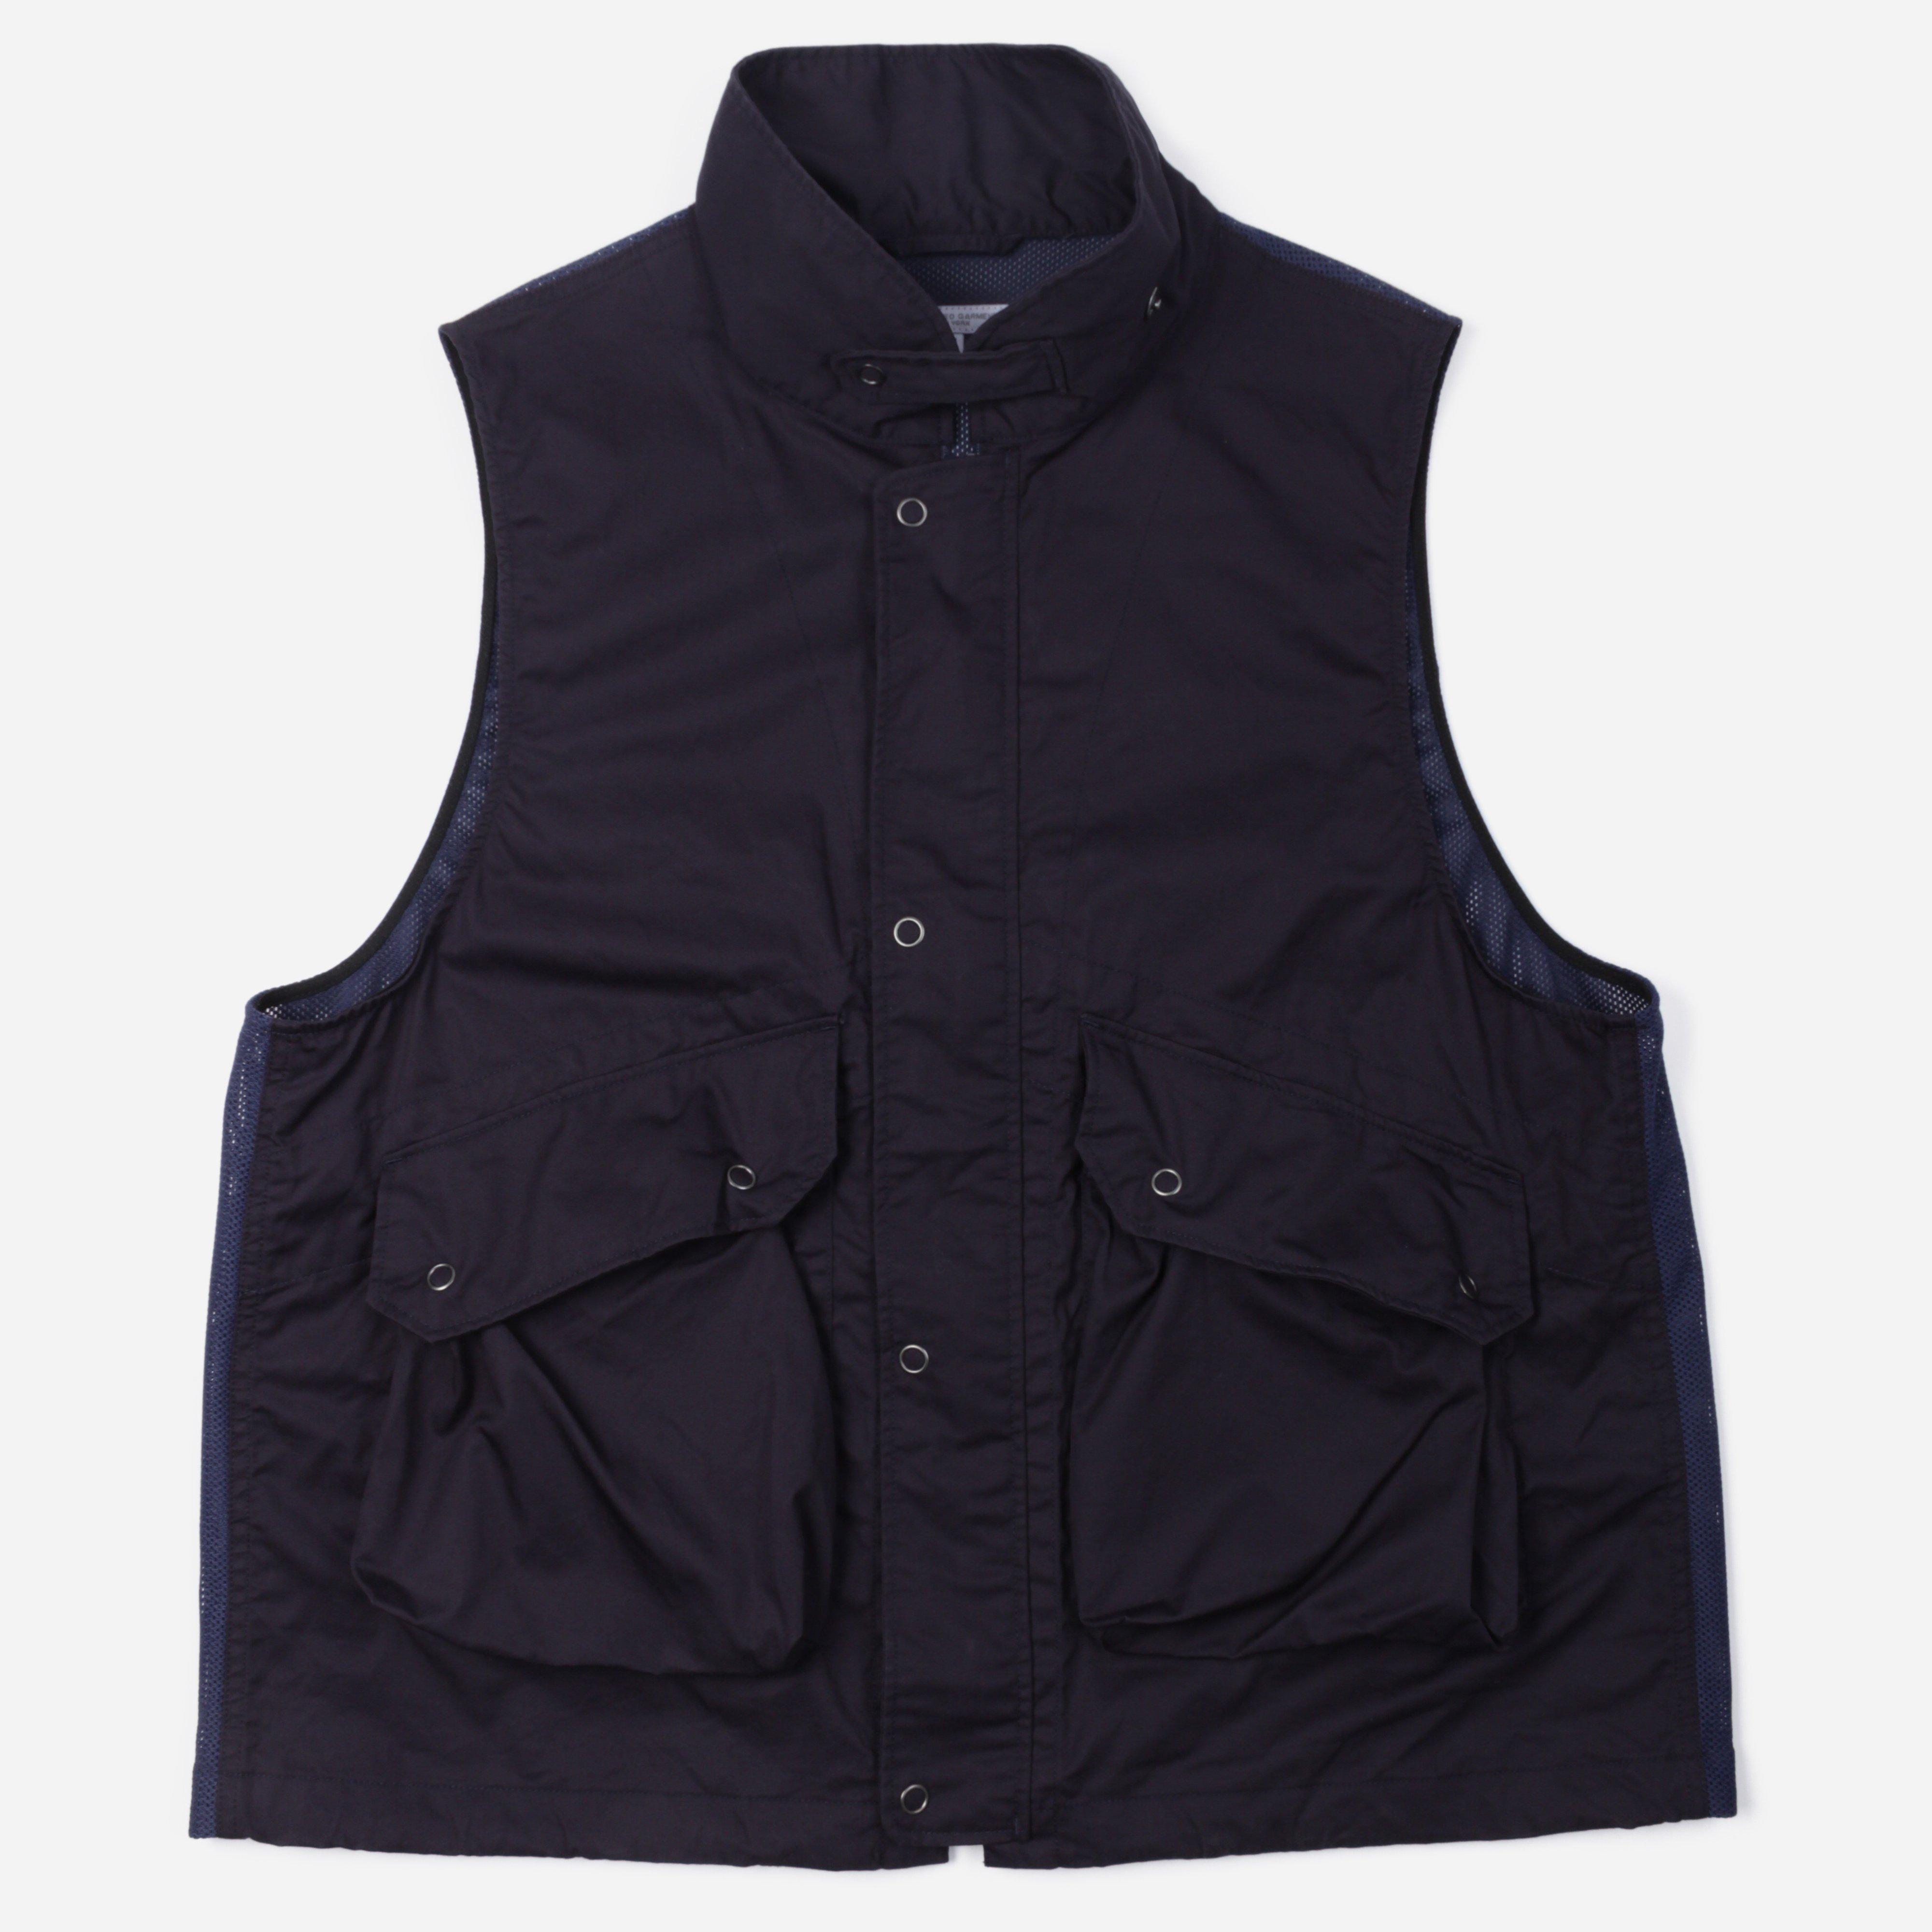 Lyst - Engineered Garments 19sc004 Field Vest in Blue for Men